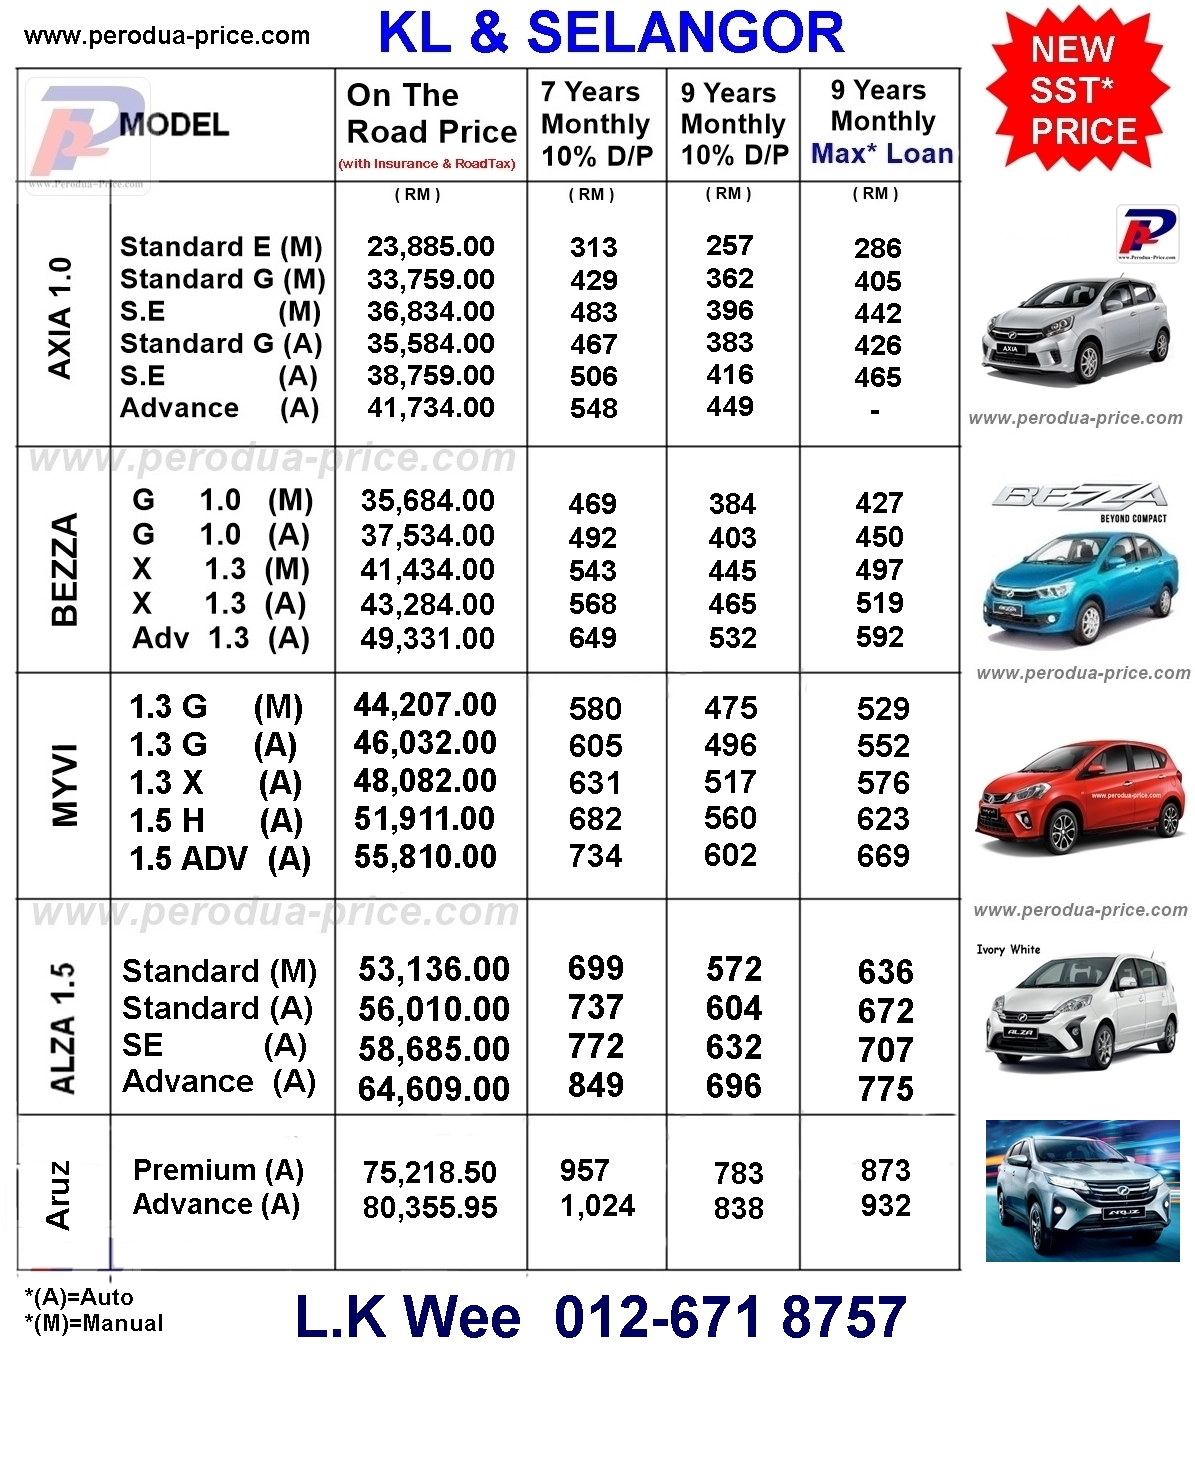 Perodua Promotion KL And Selangor - 012 671 8757